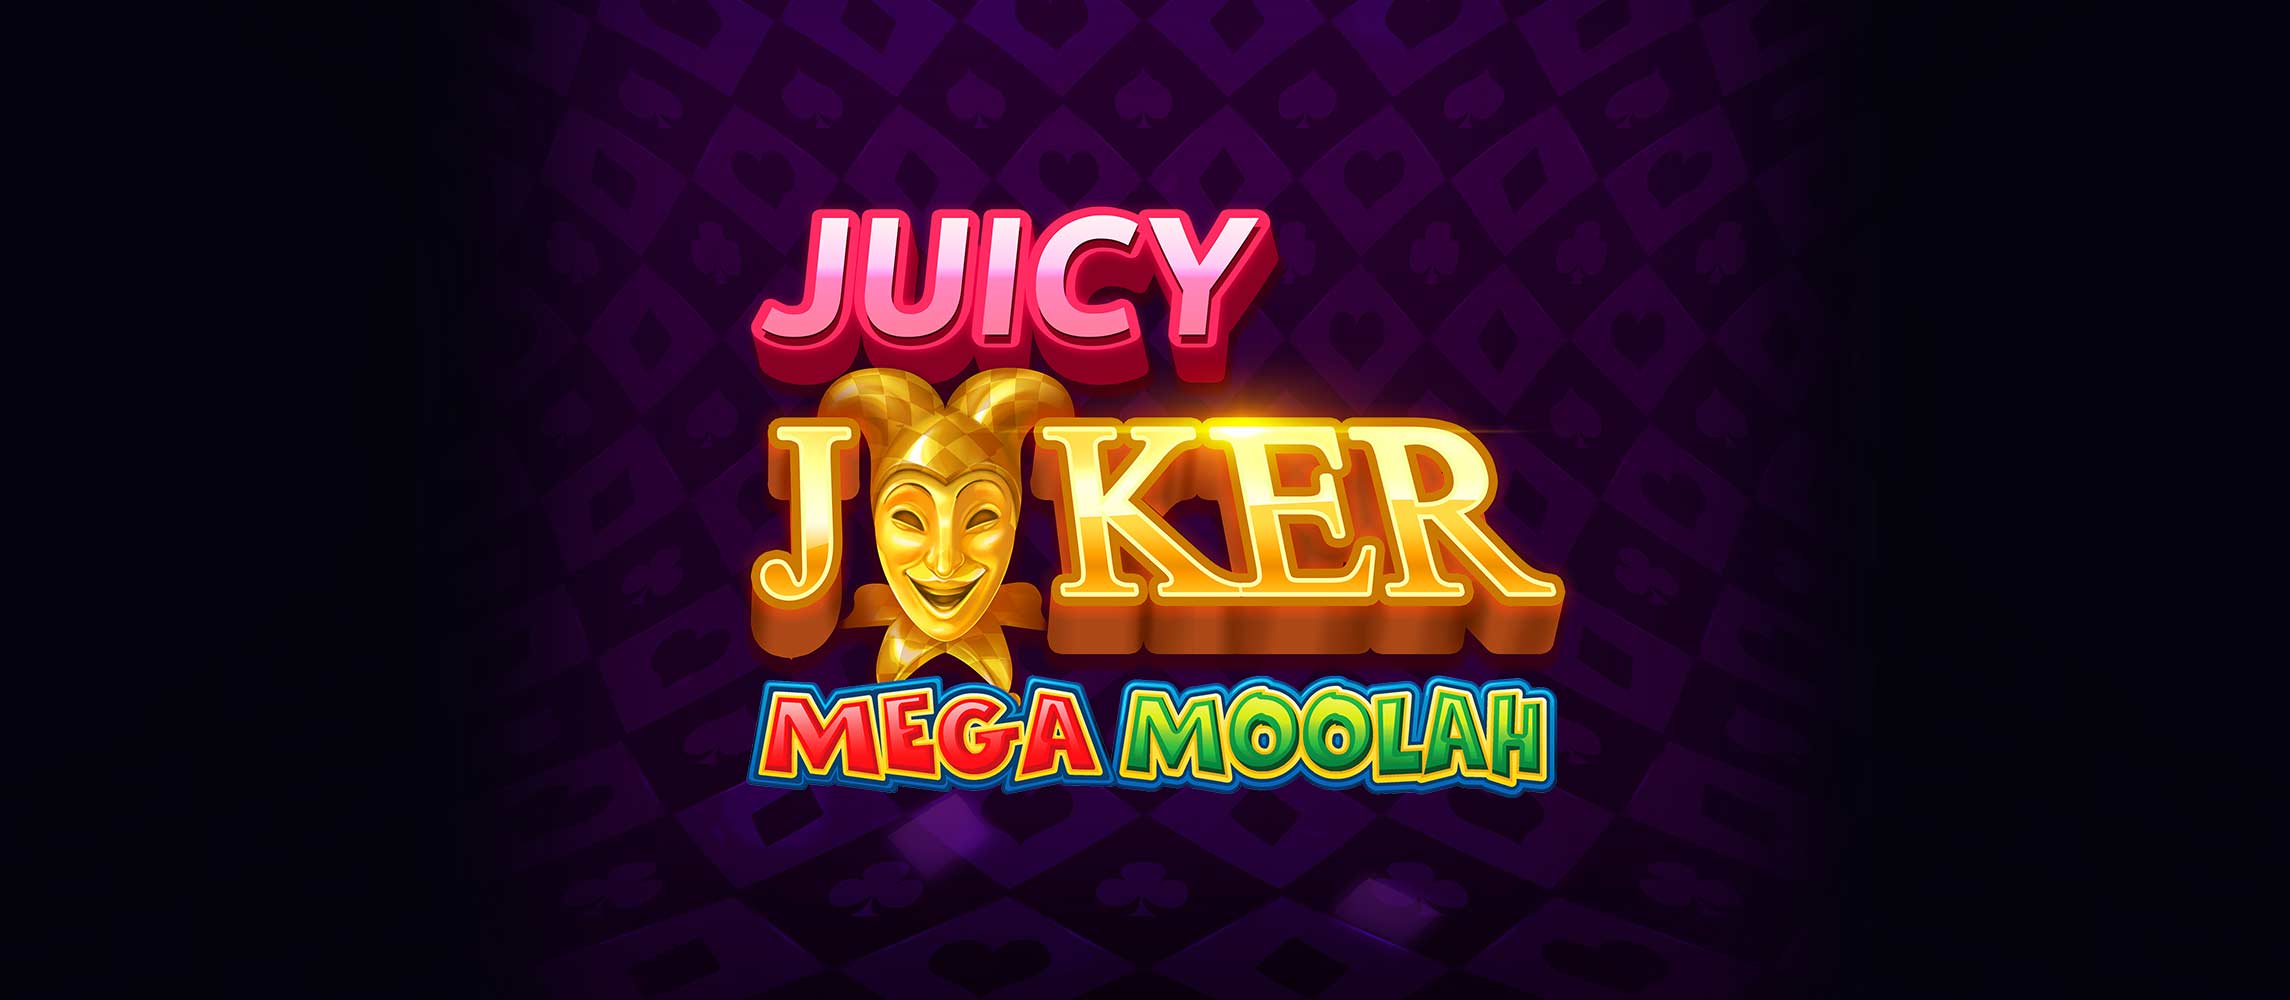 Juicy Joker Mega Moolah slot by Microgaming     